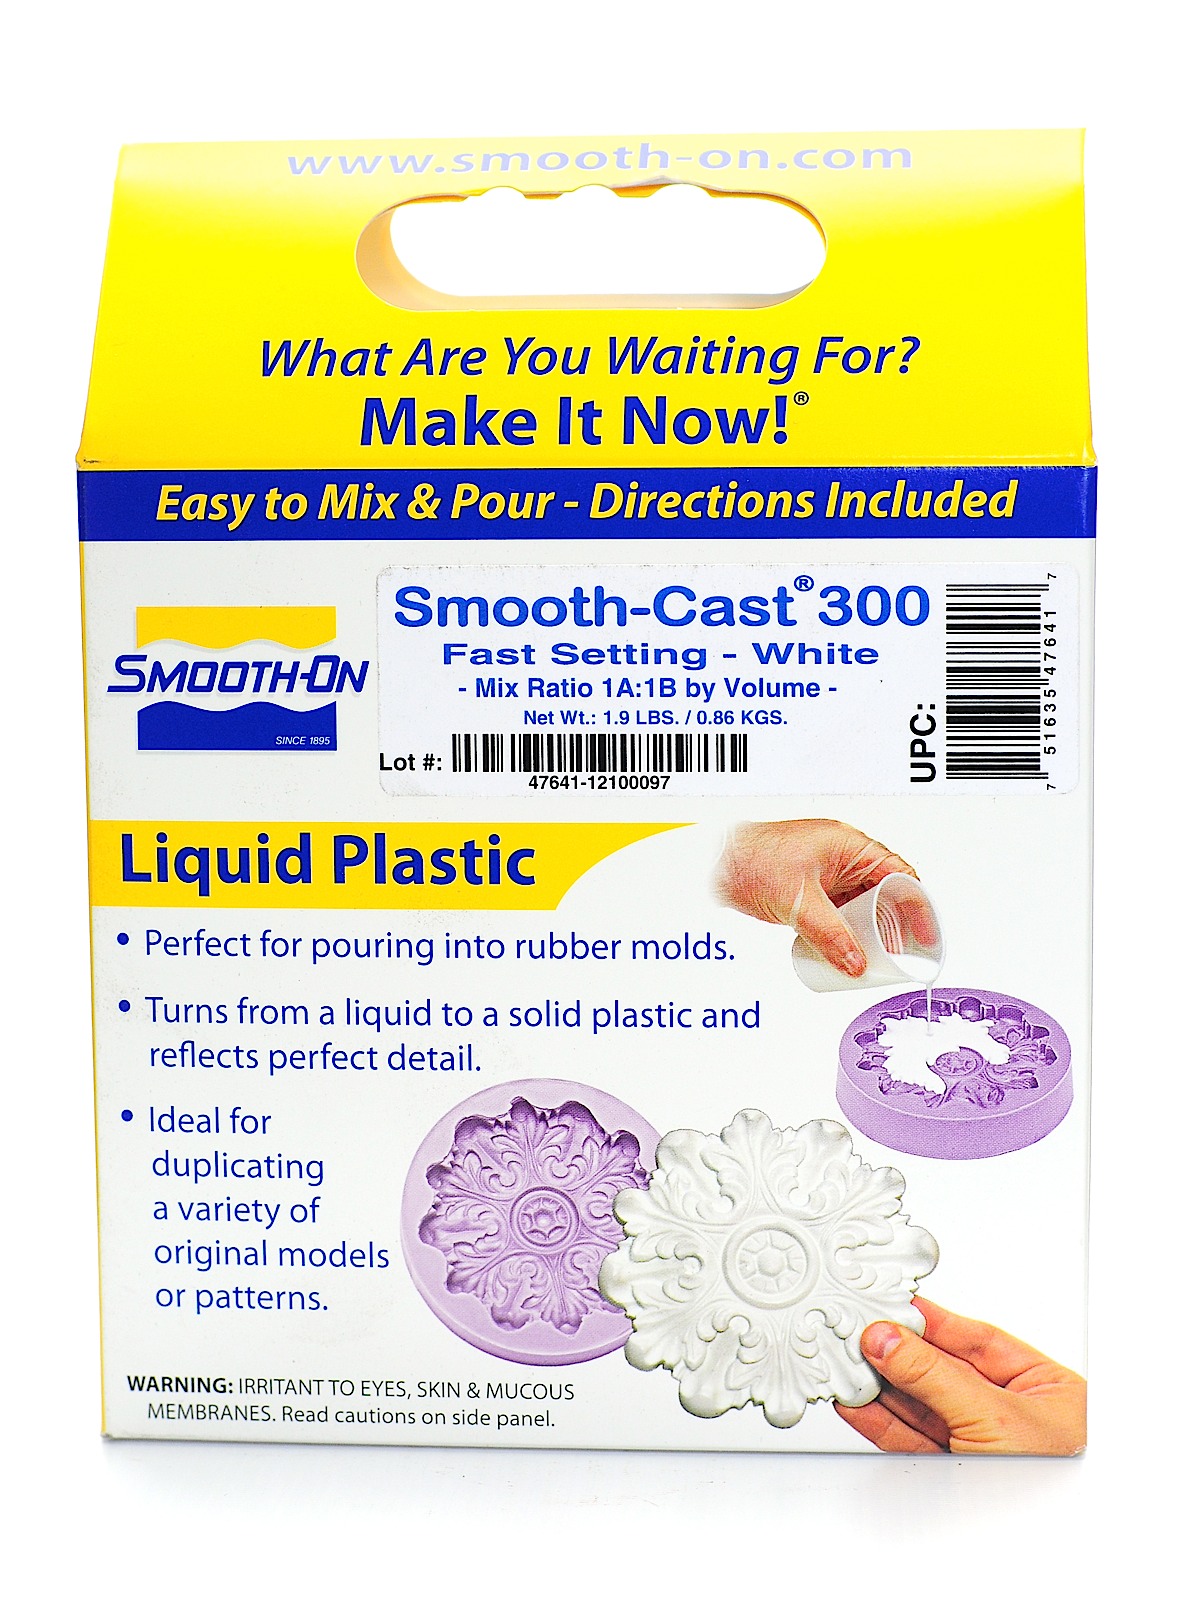 Smooth-cast 300 Liquid Plastic Compound Smooth-cast 300